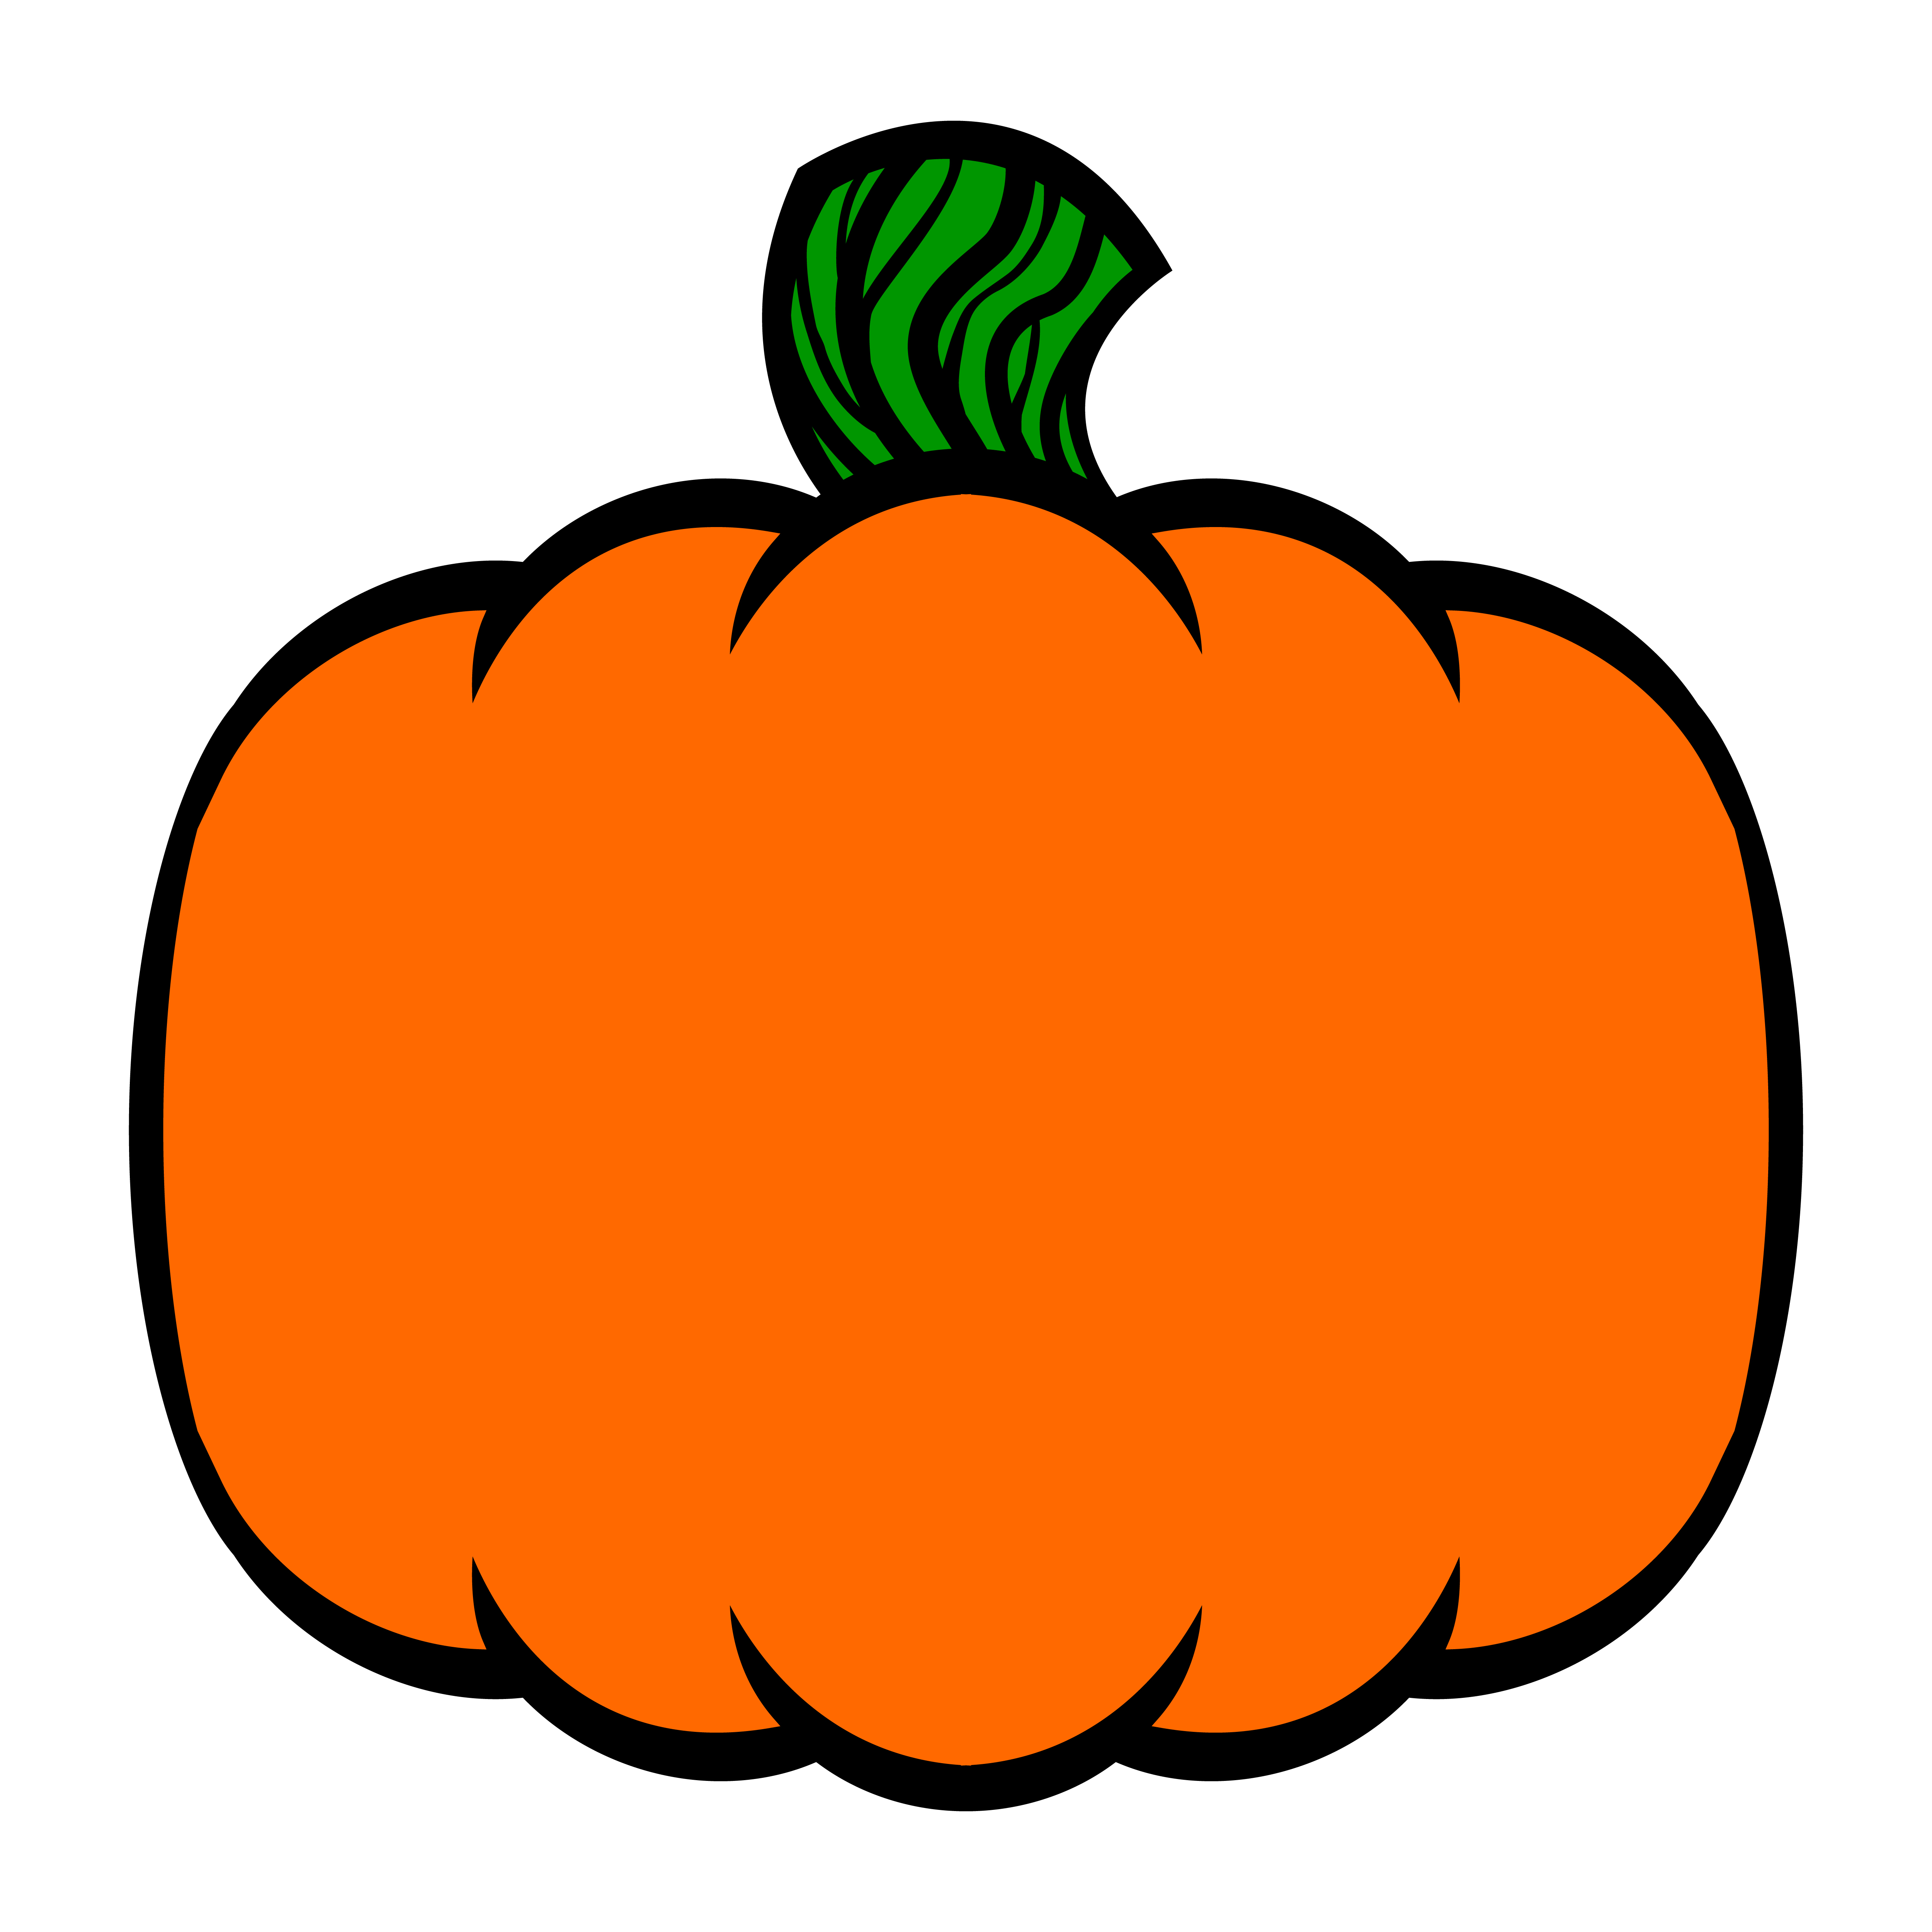 Download Pumpkin Vector Icon - Download Free Vectors, Clipart ...